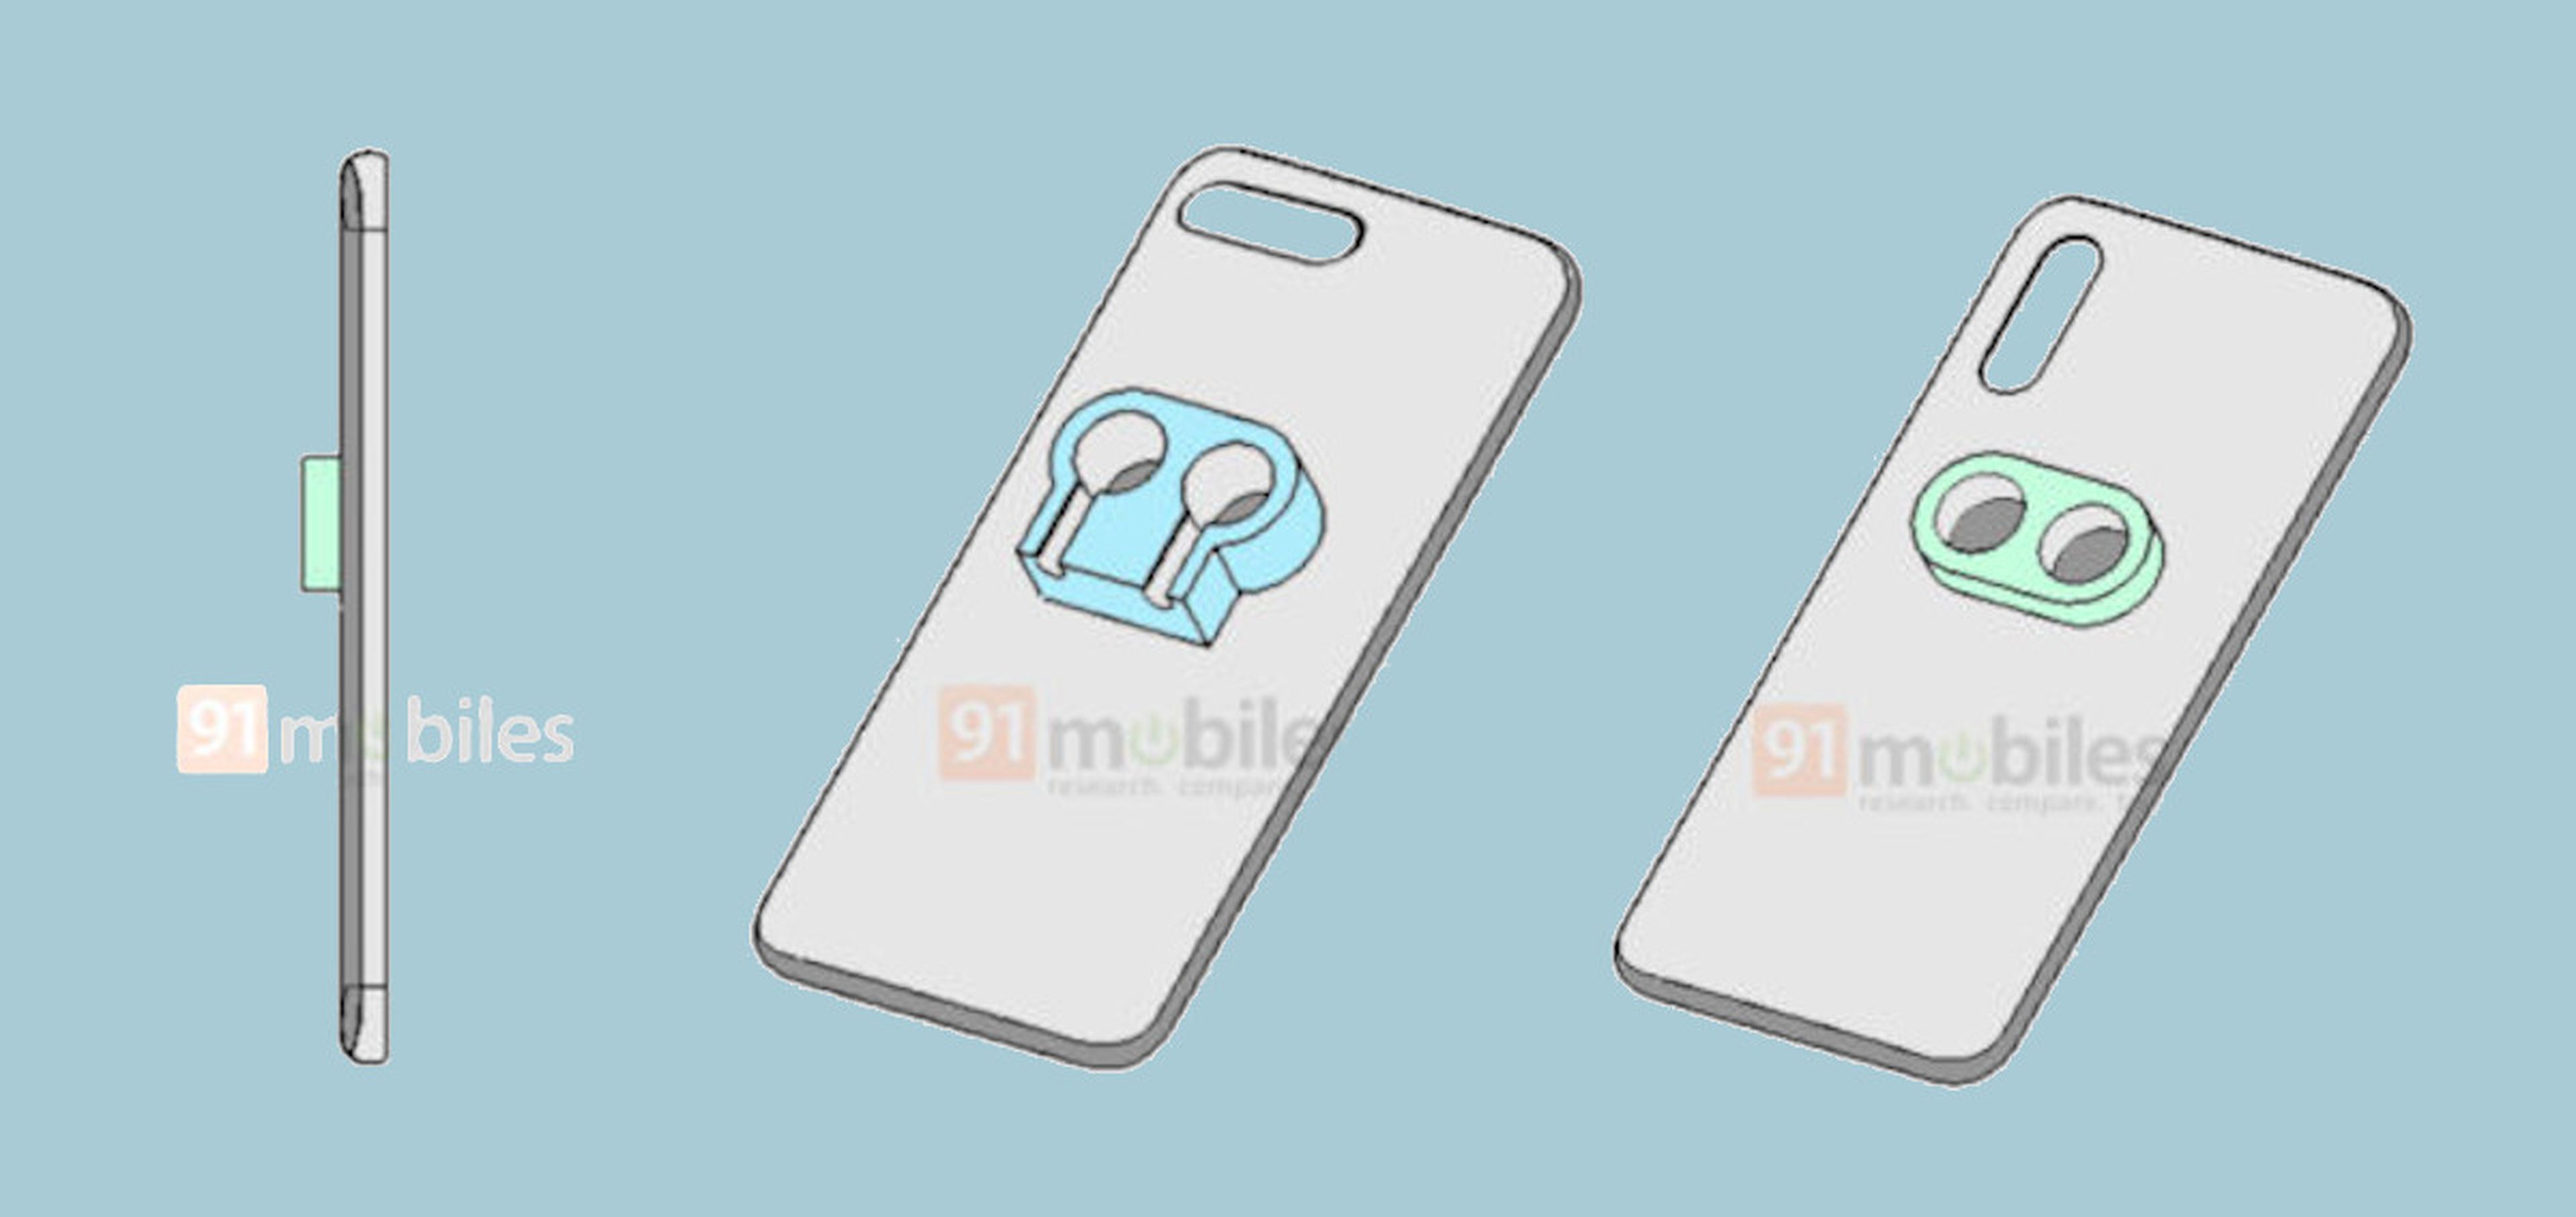 Patente Xiaomi funda para cargar auriculares